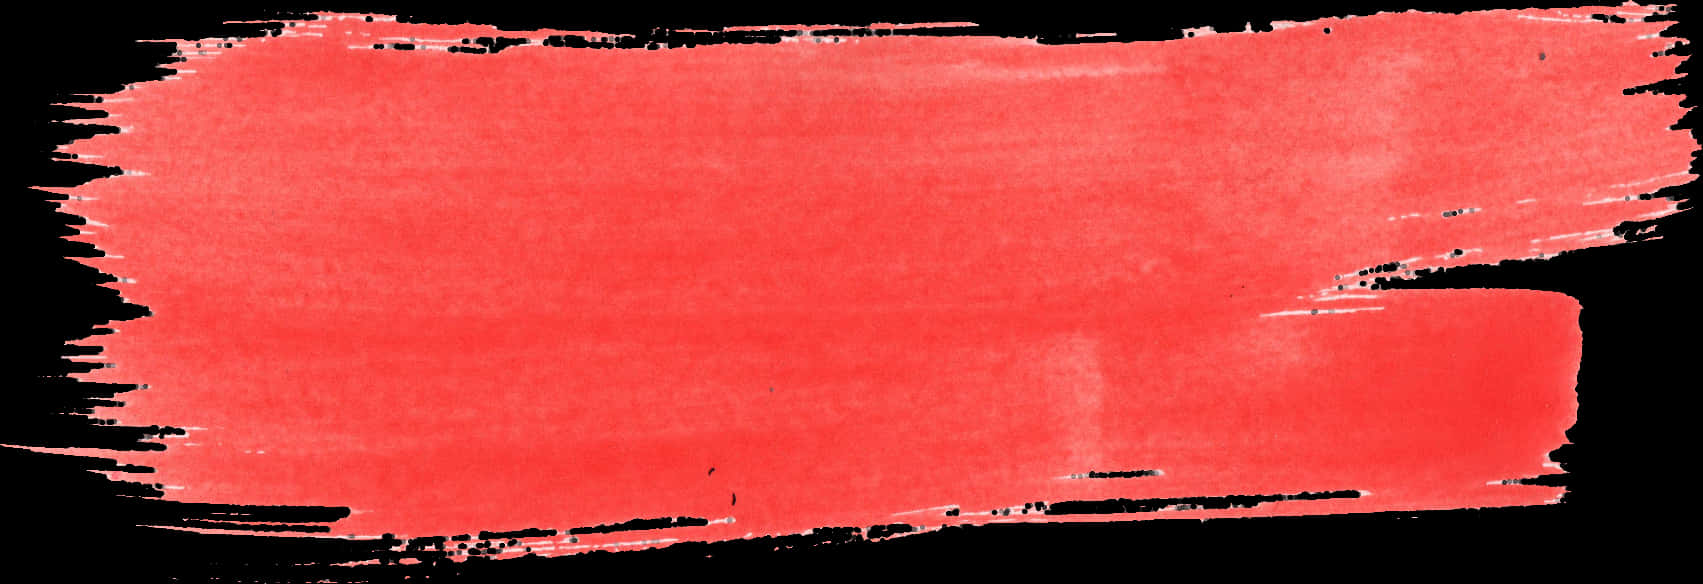 A Red Rectangular Frame With Black Border